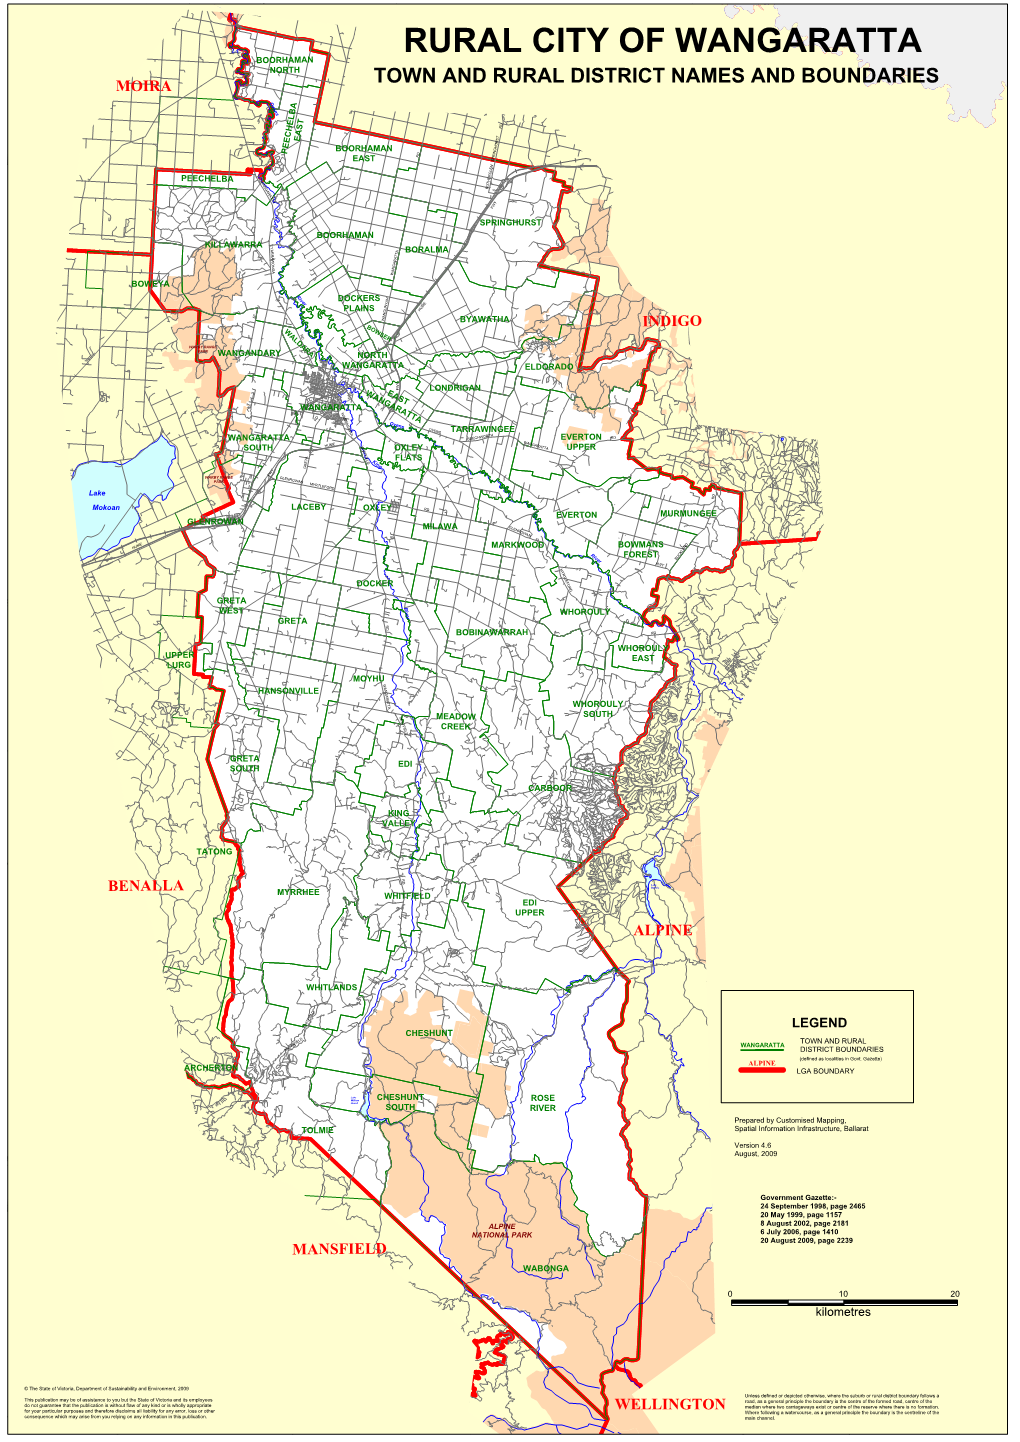 Rural City of Wangaratta Boorhaman North Moira Town and Rural District Names and Boundaries